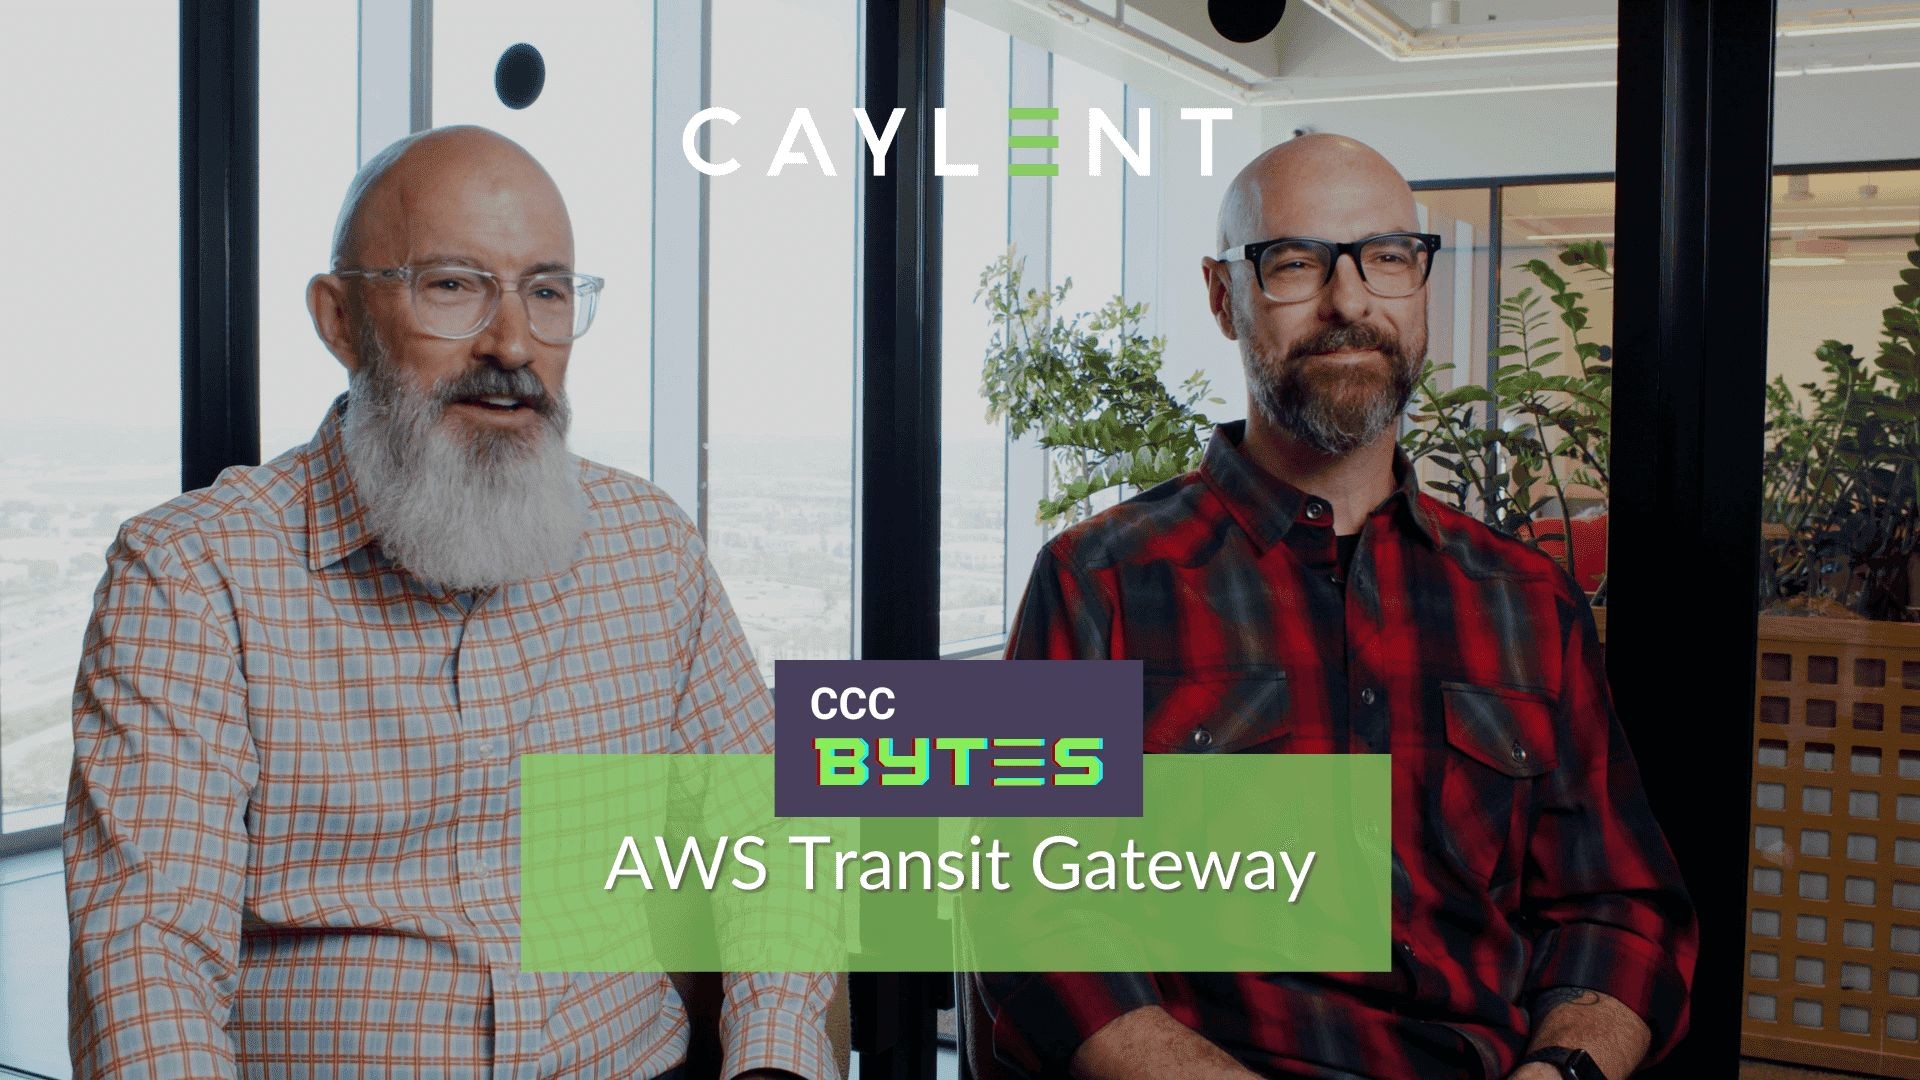 AWS Transit Gateway